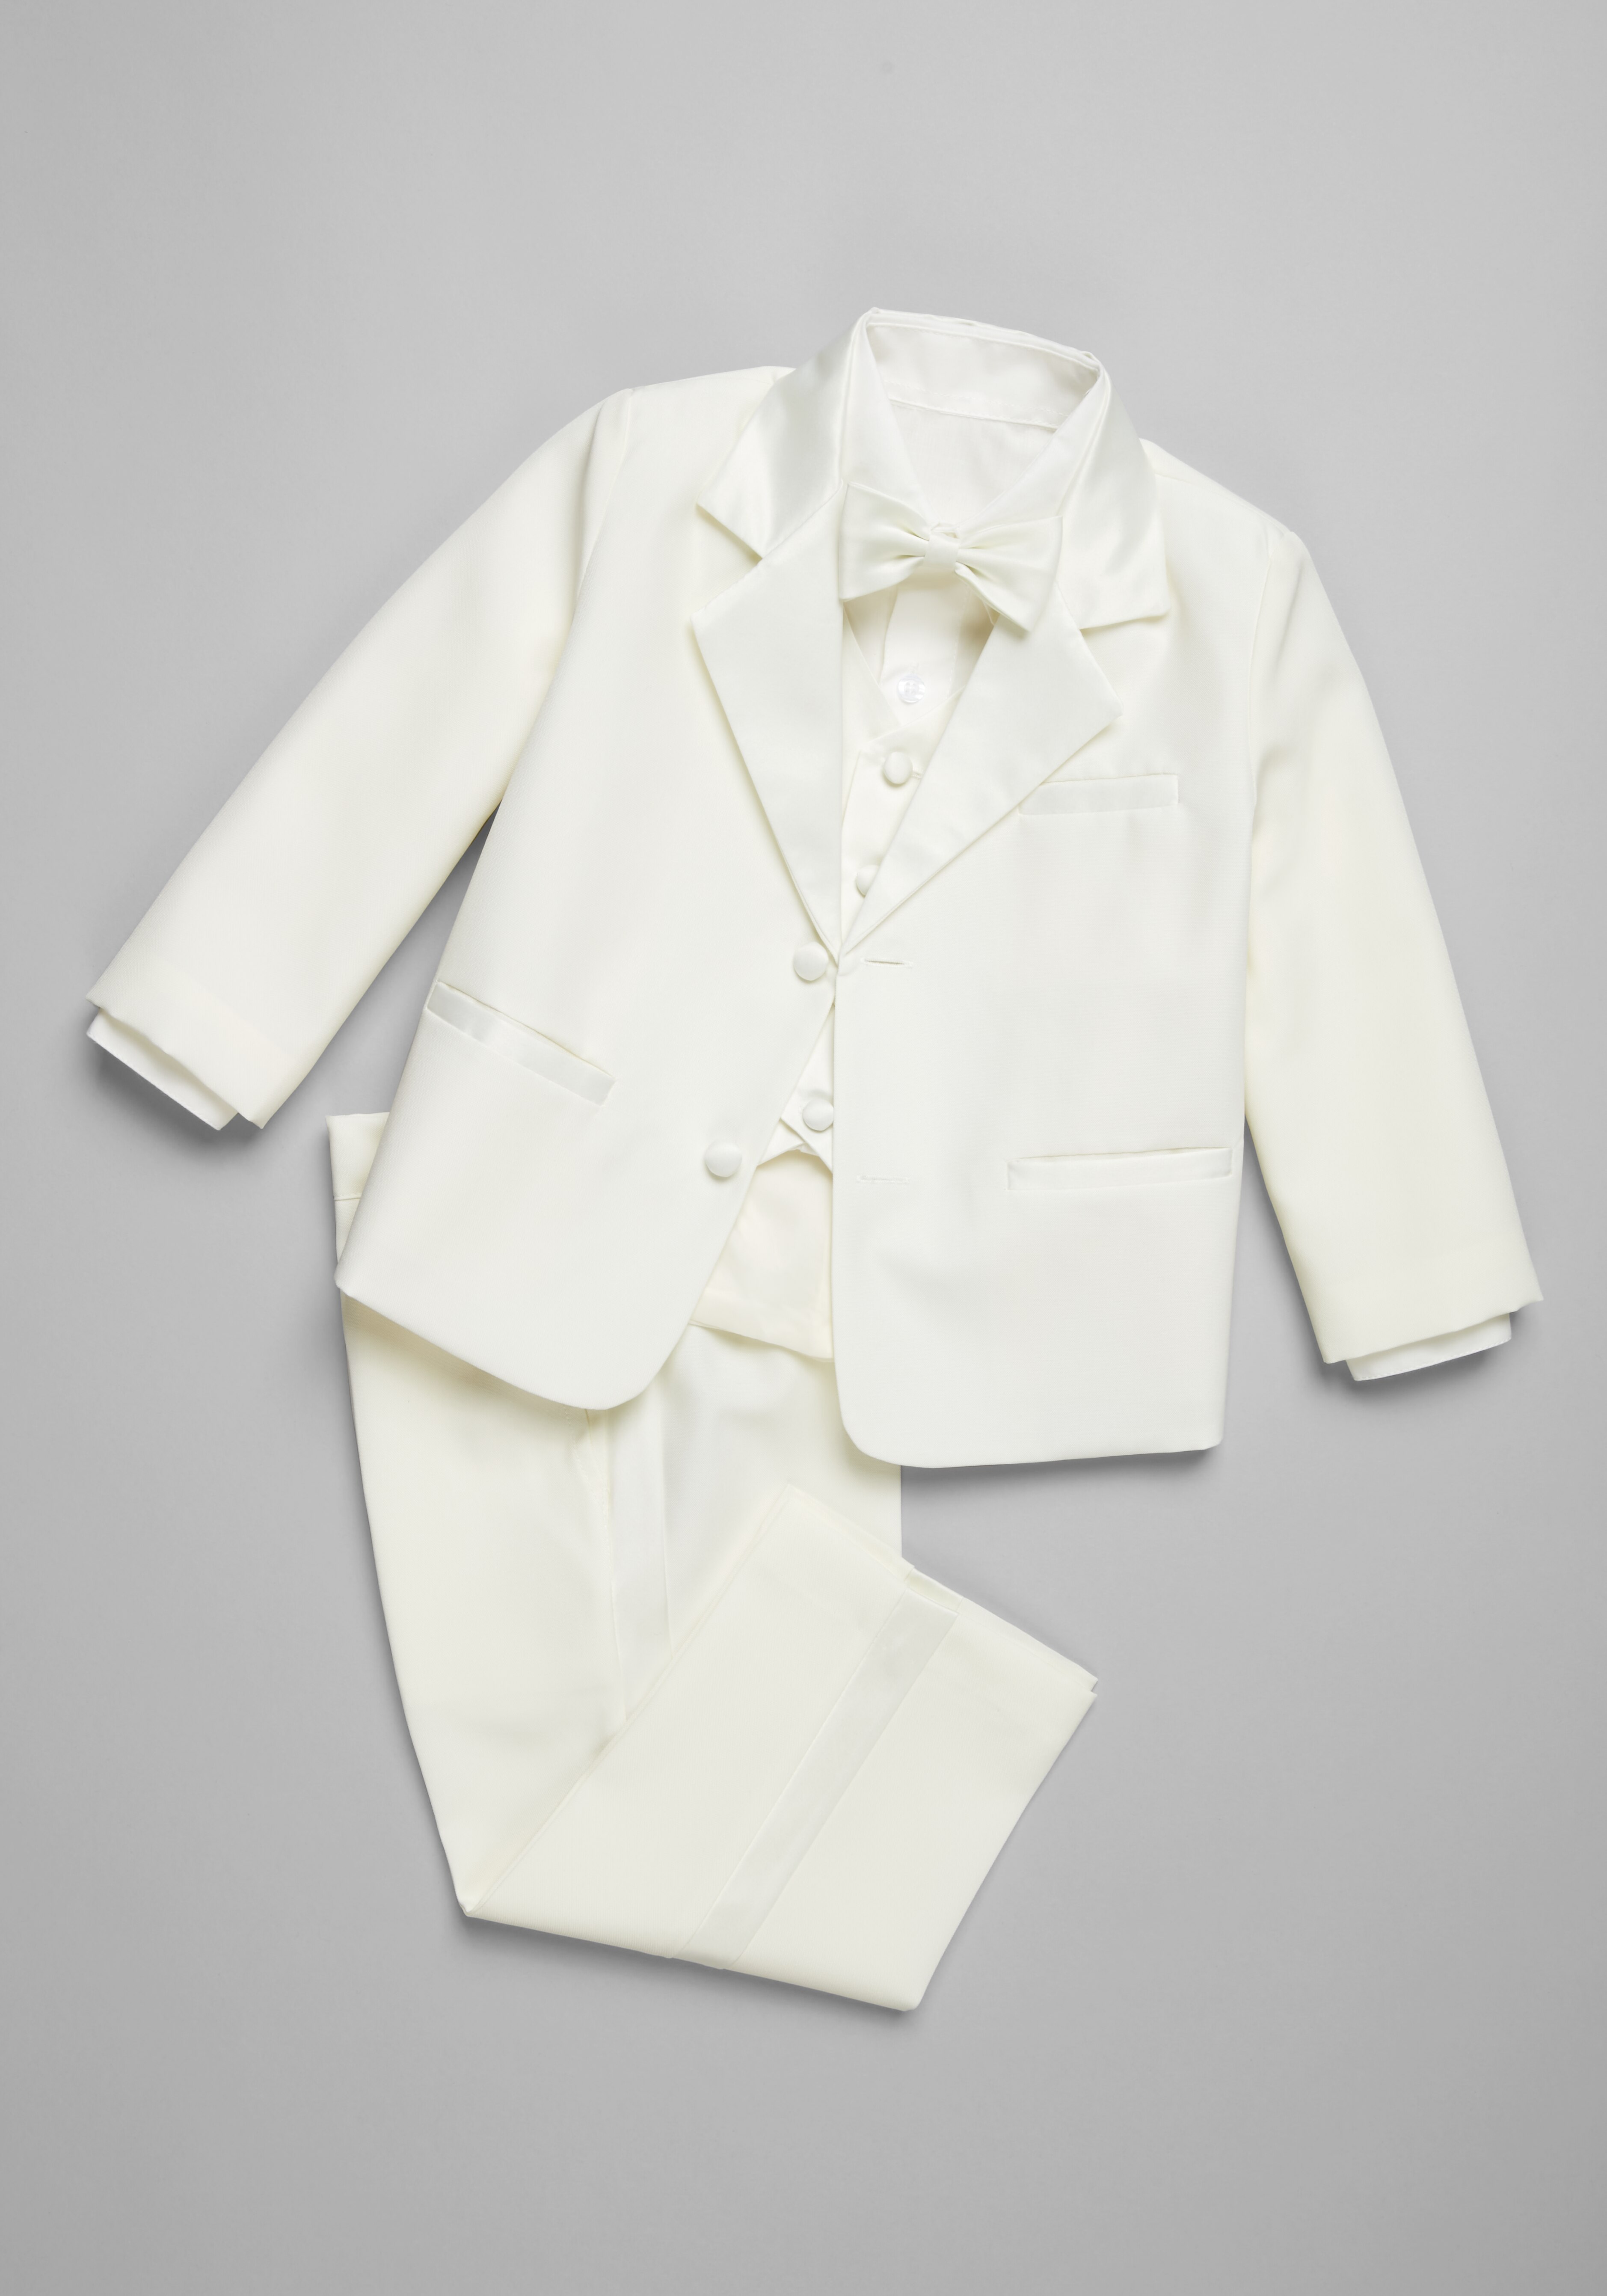 US$ 59.54 - White Suit Evening Dress - www.joymanmall.com